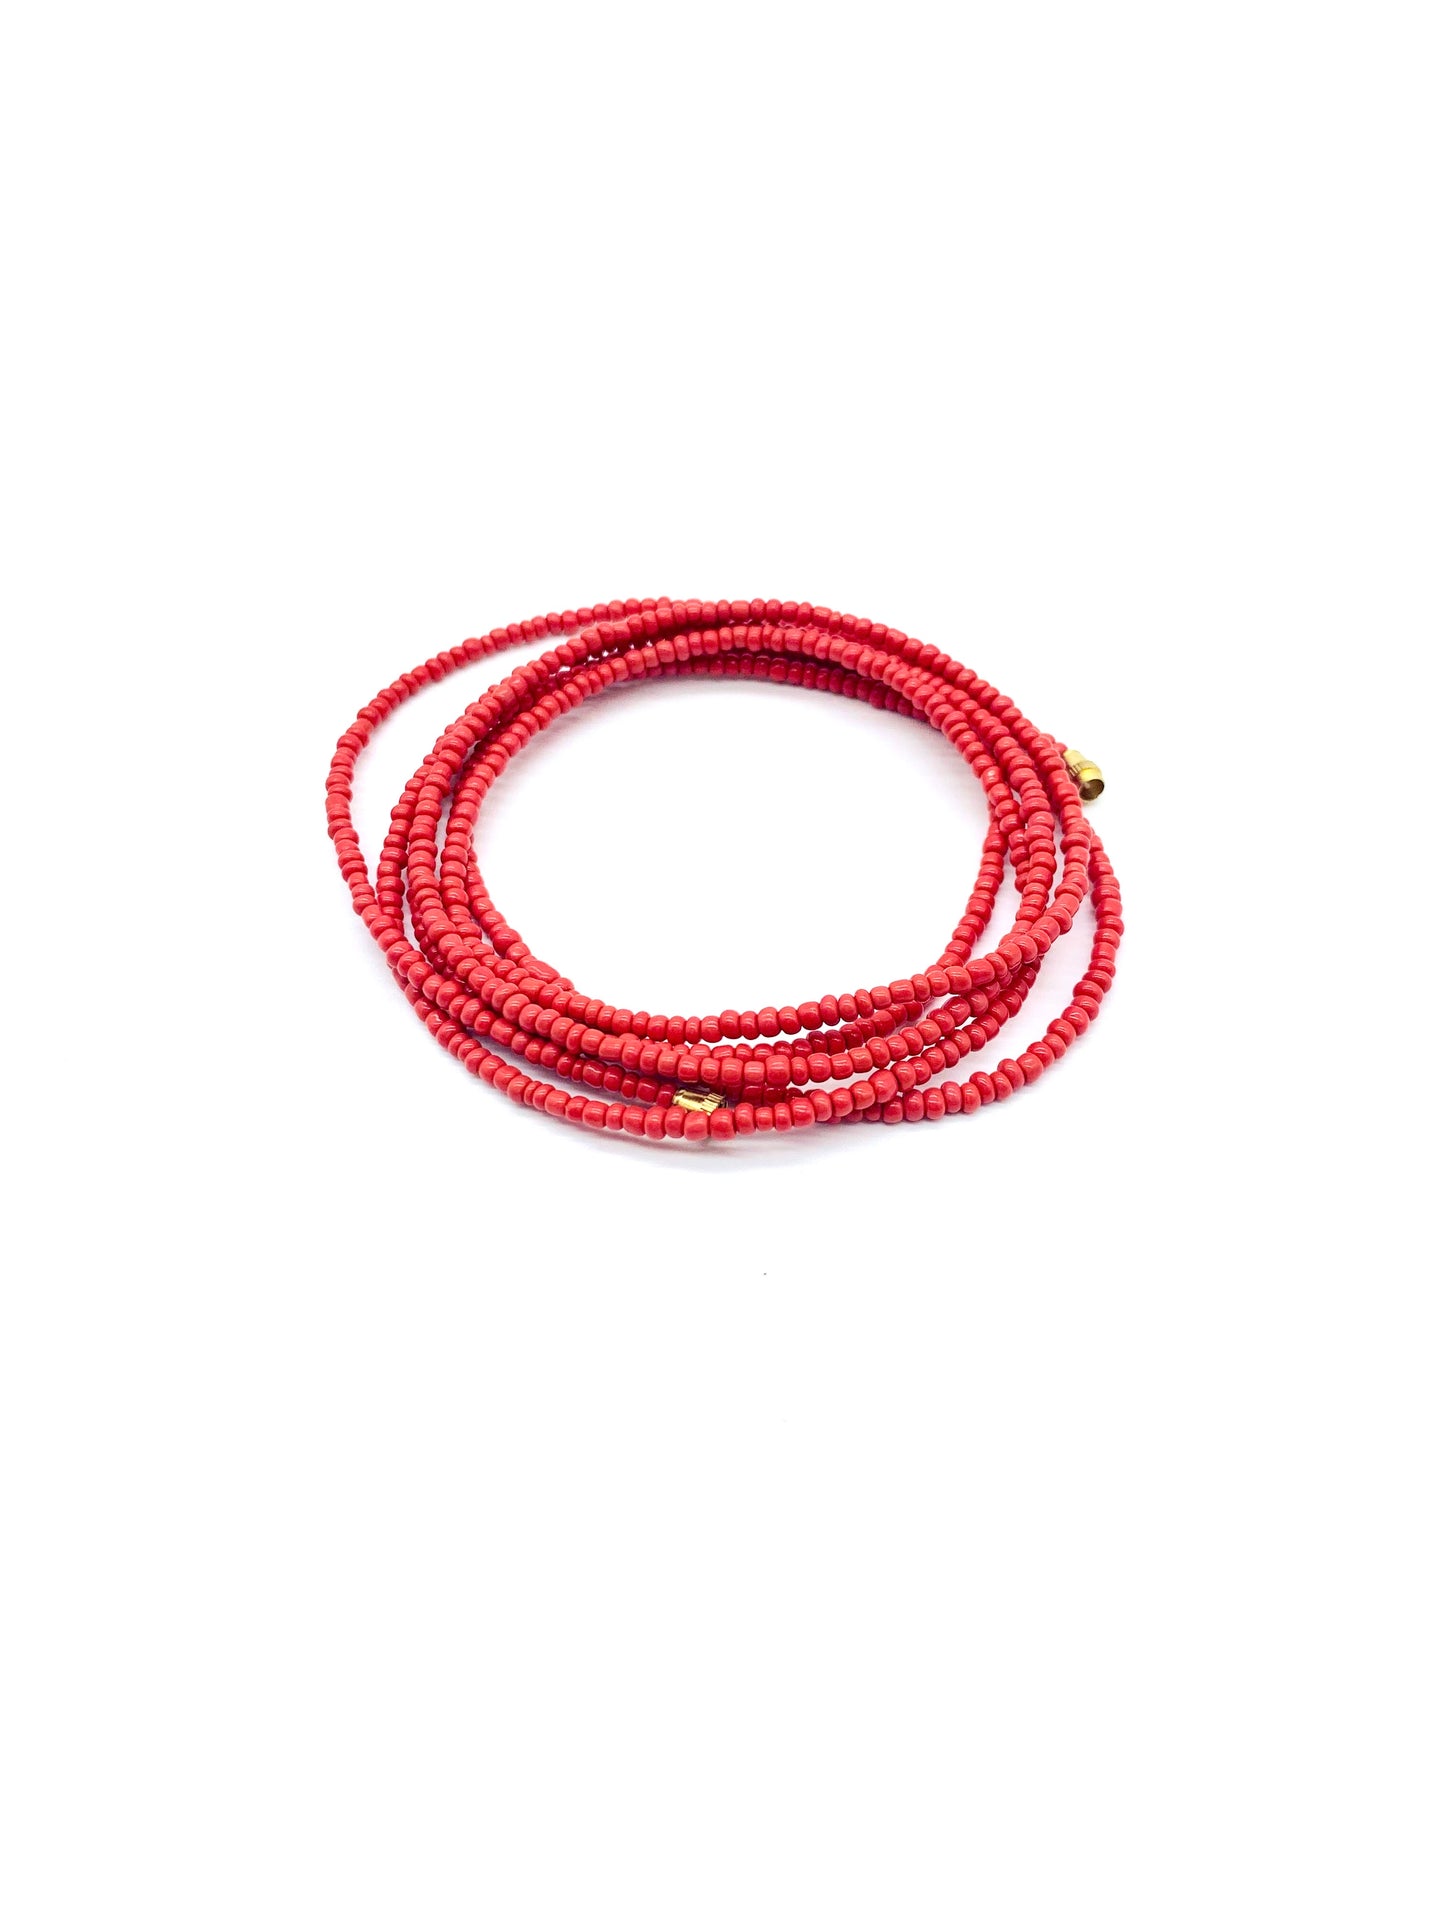 Red Ash! African Waist Beads / Necklace / Bracelet / Anklet